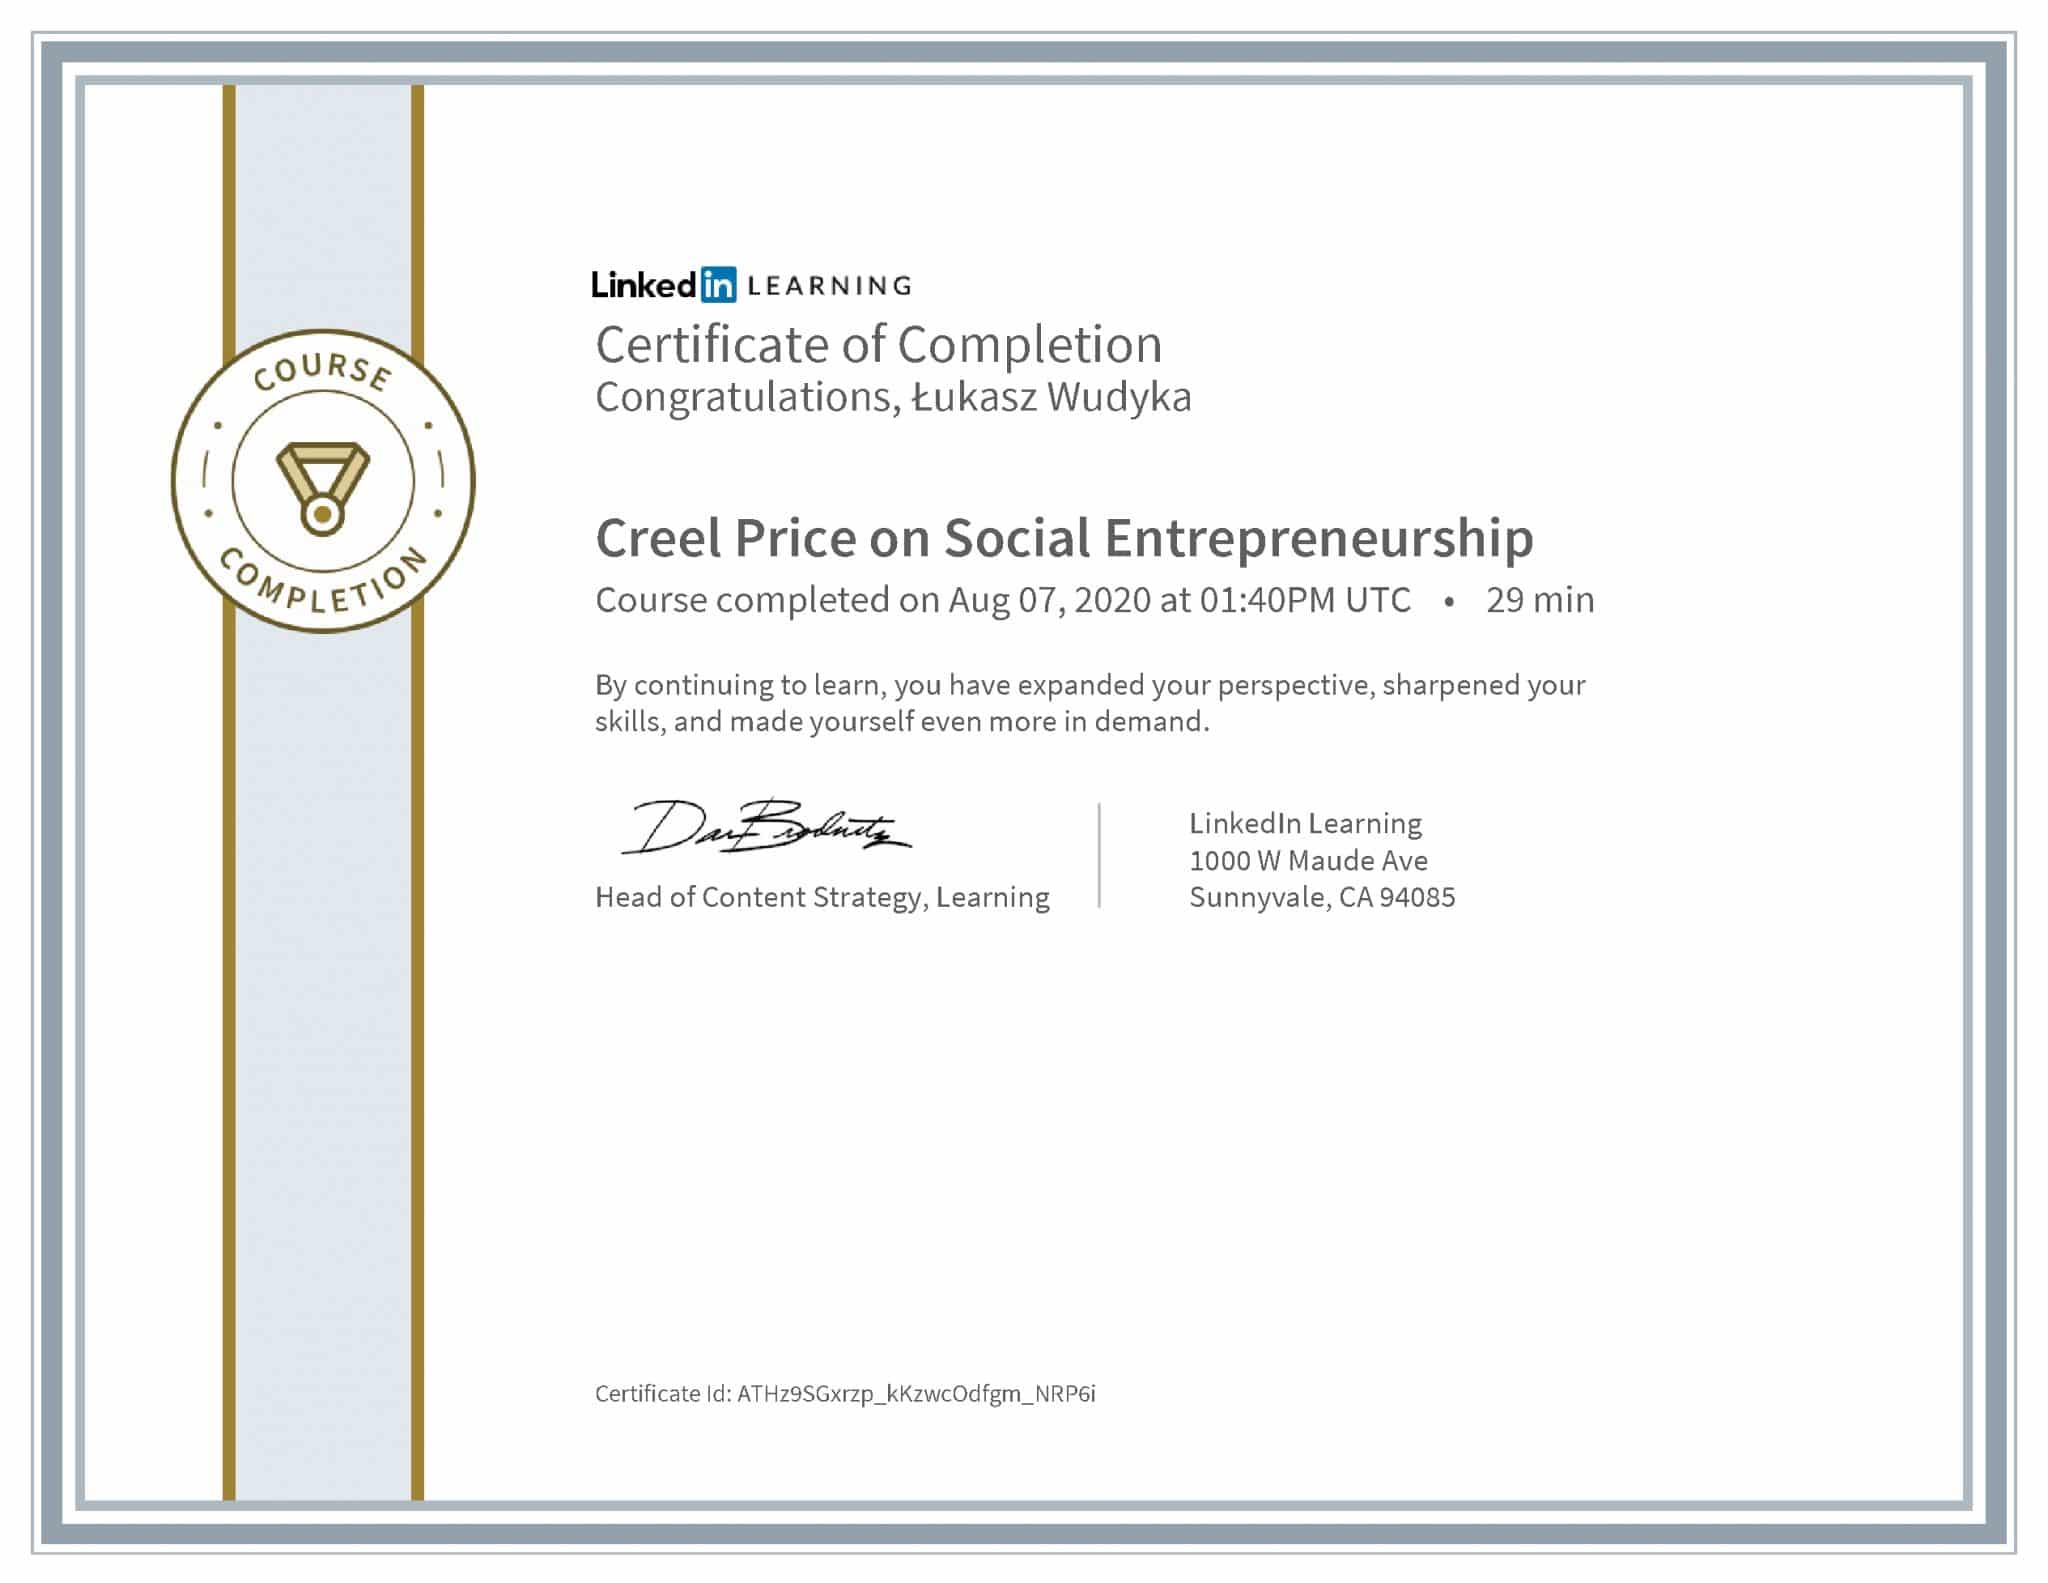 Łukasz Wudyka certyfikat LinkedIn Creel Price on Social Entrepreneurship